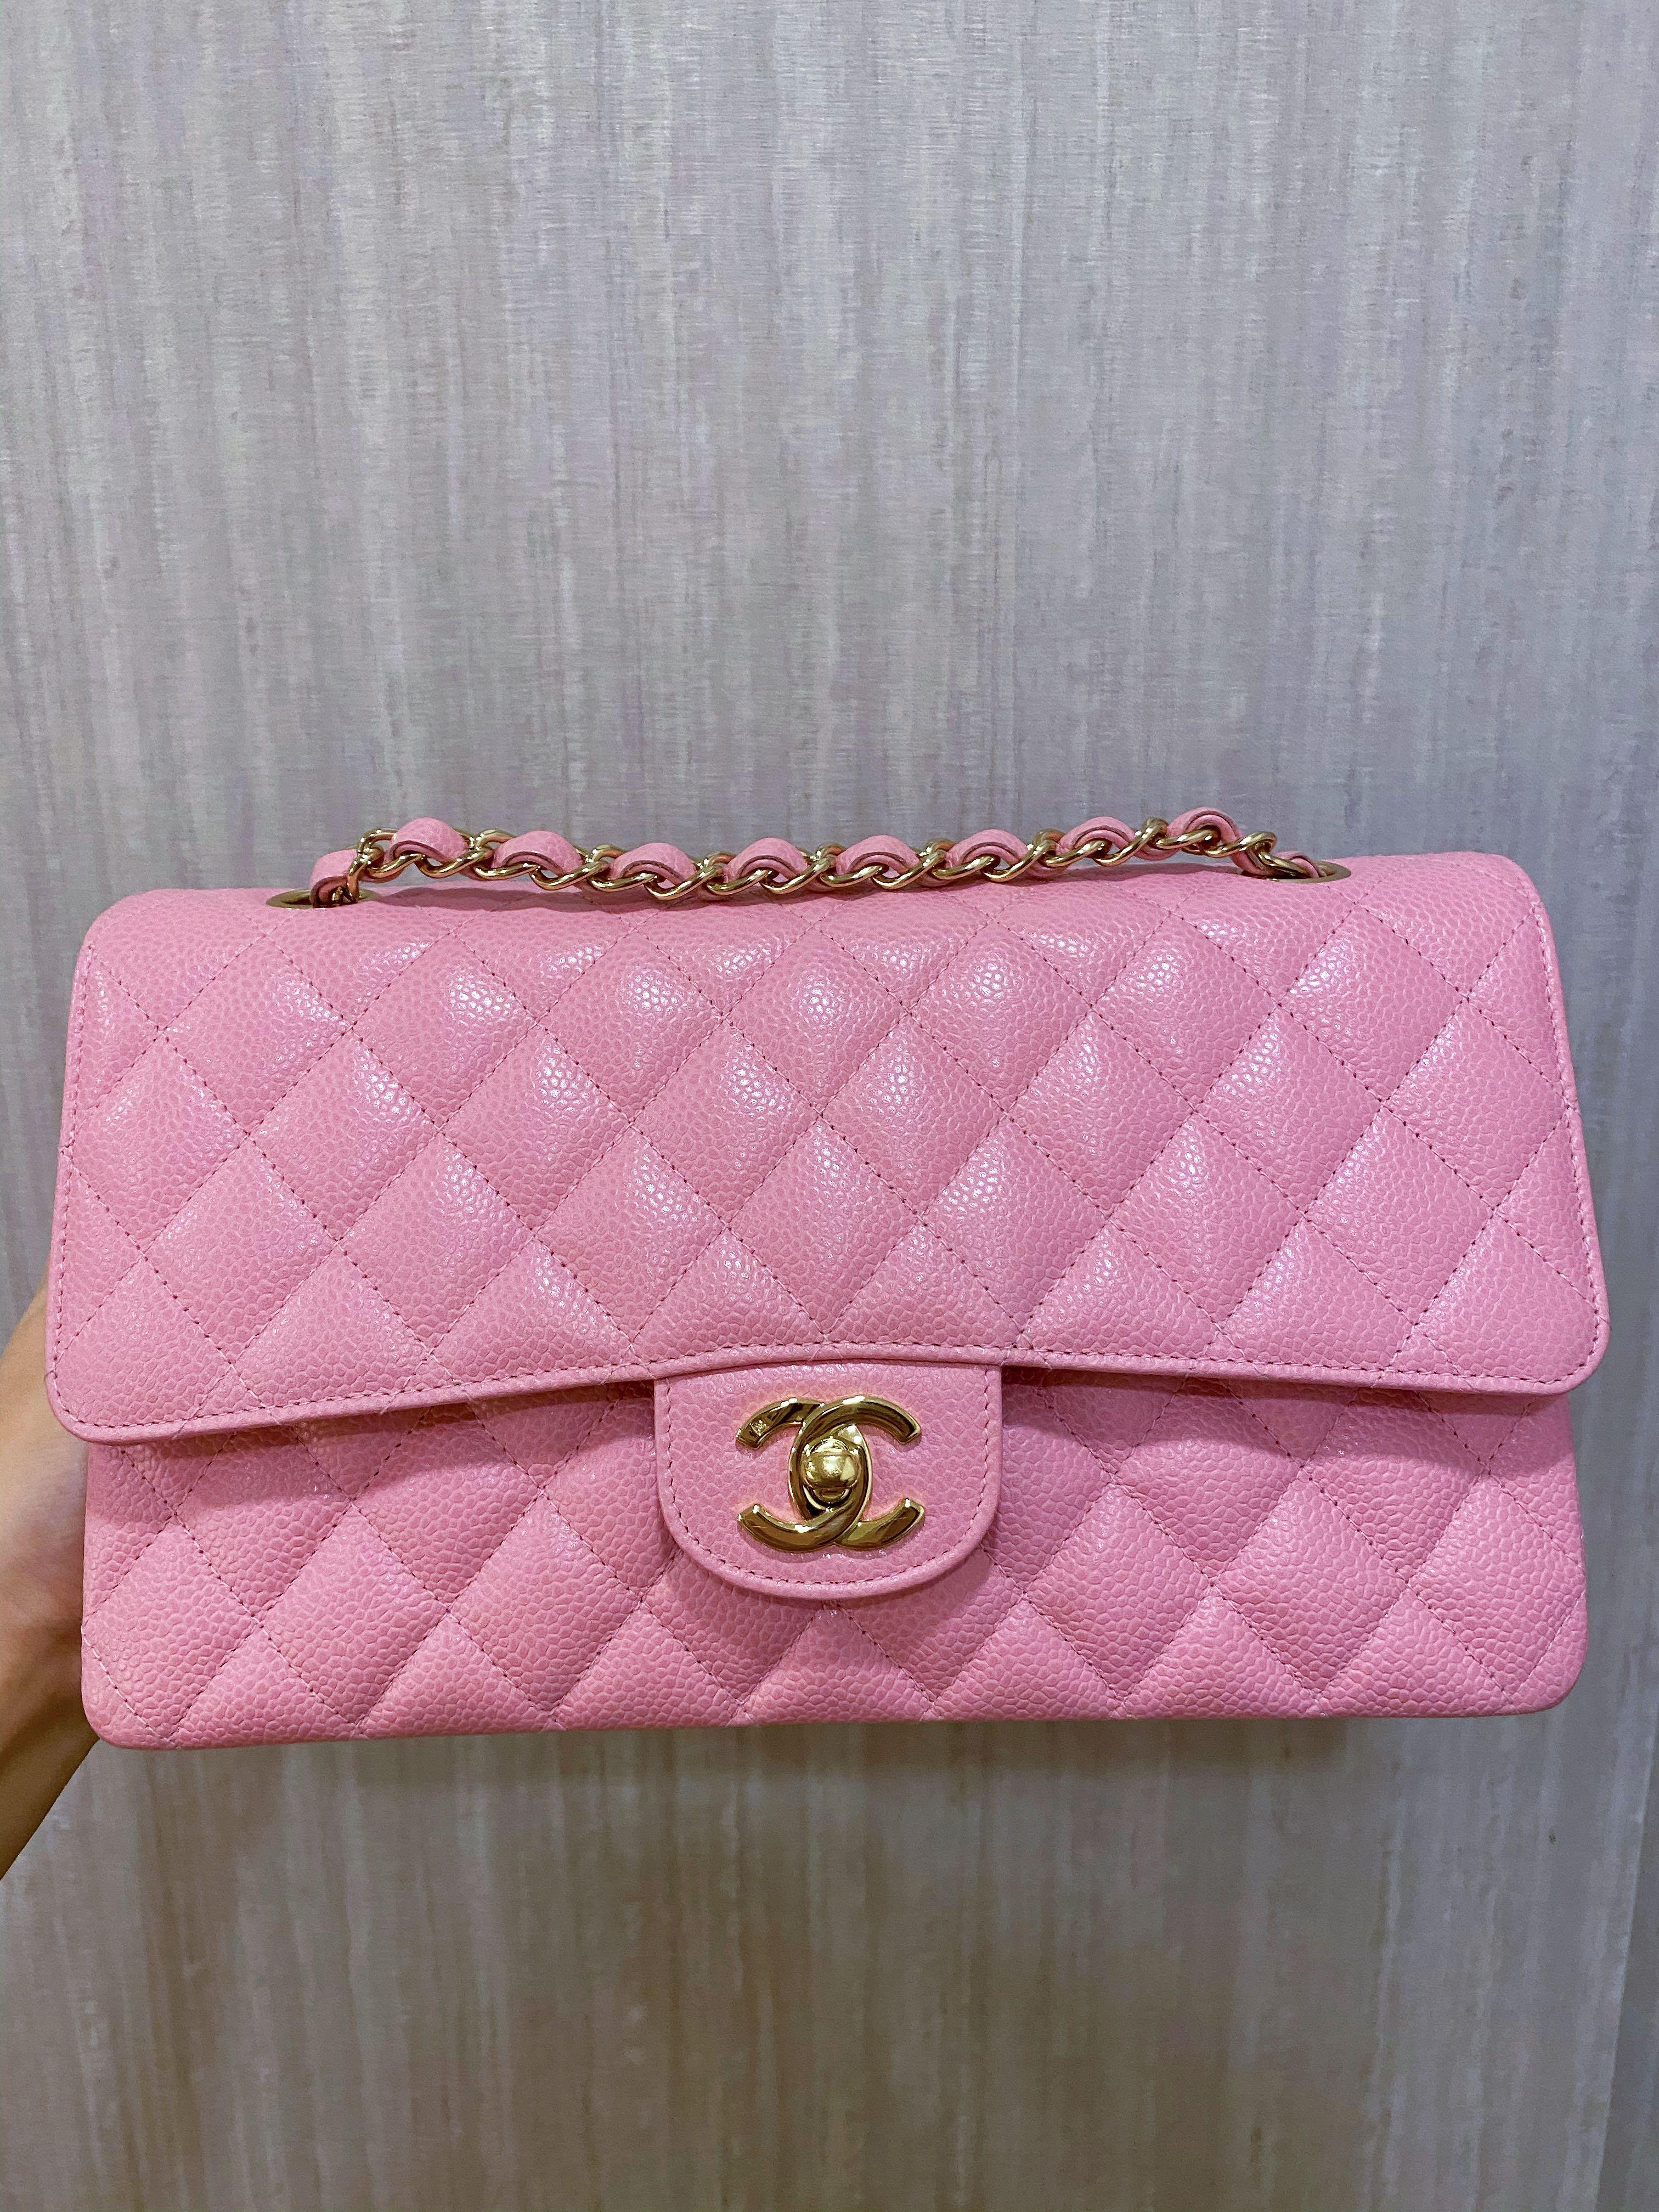 pink chanel flap bag